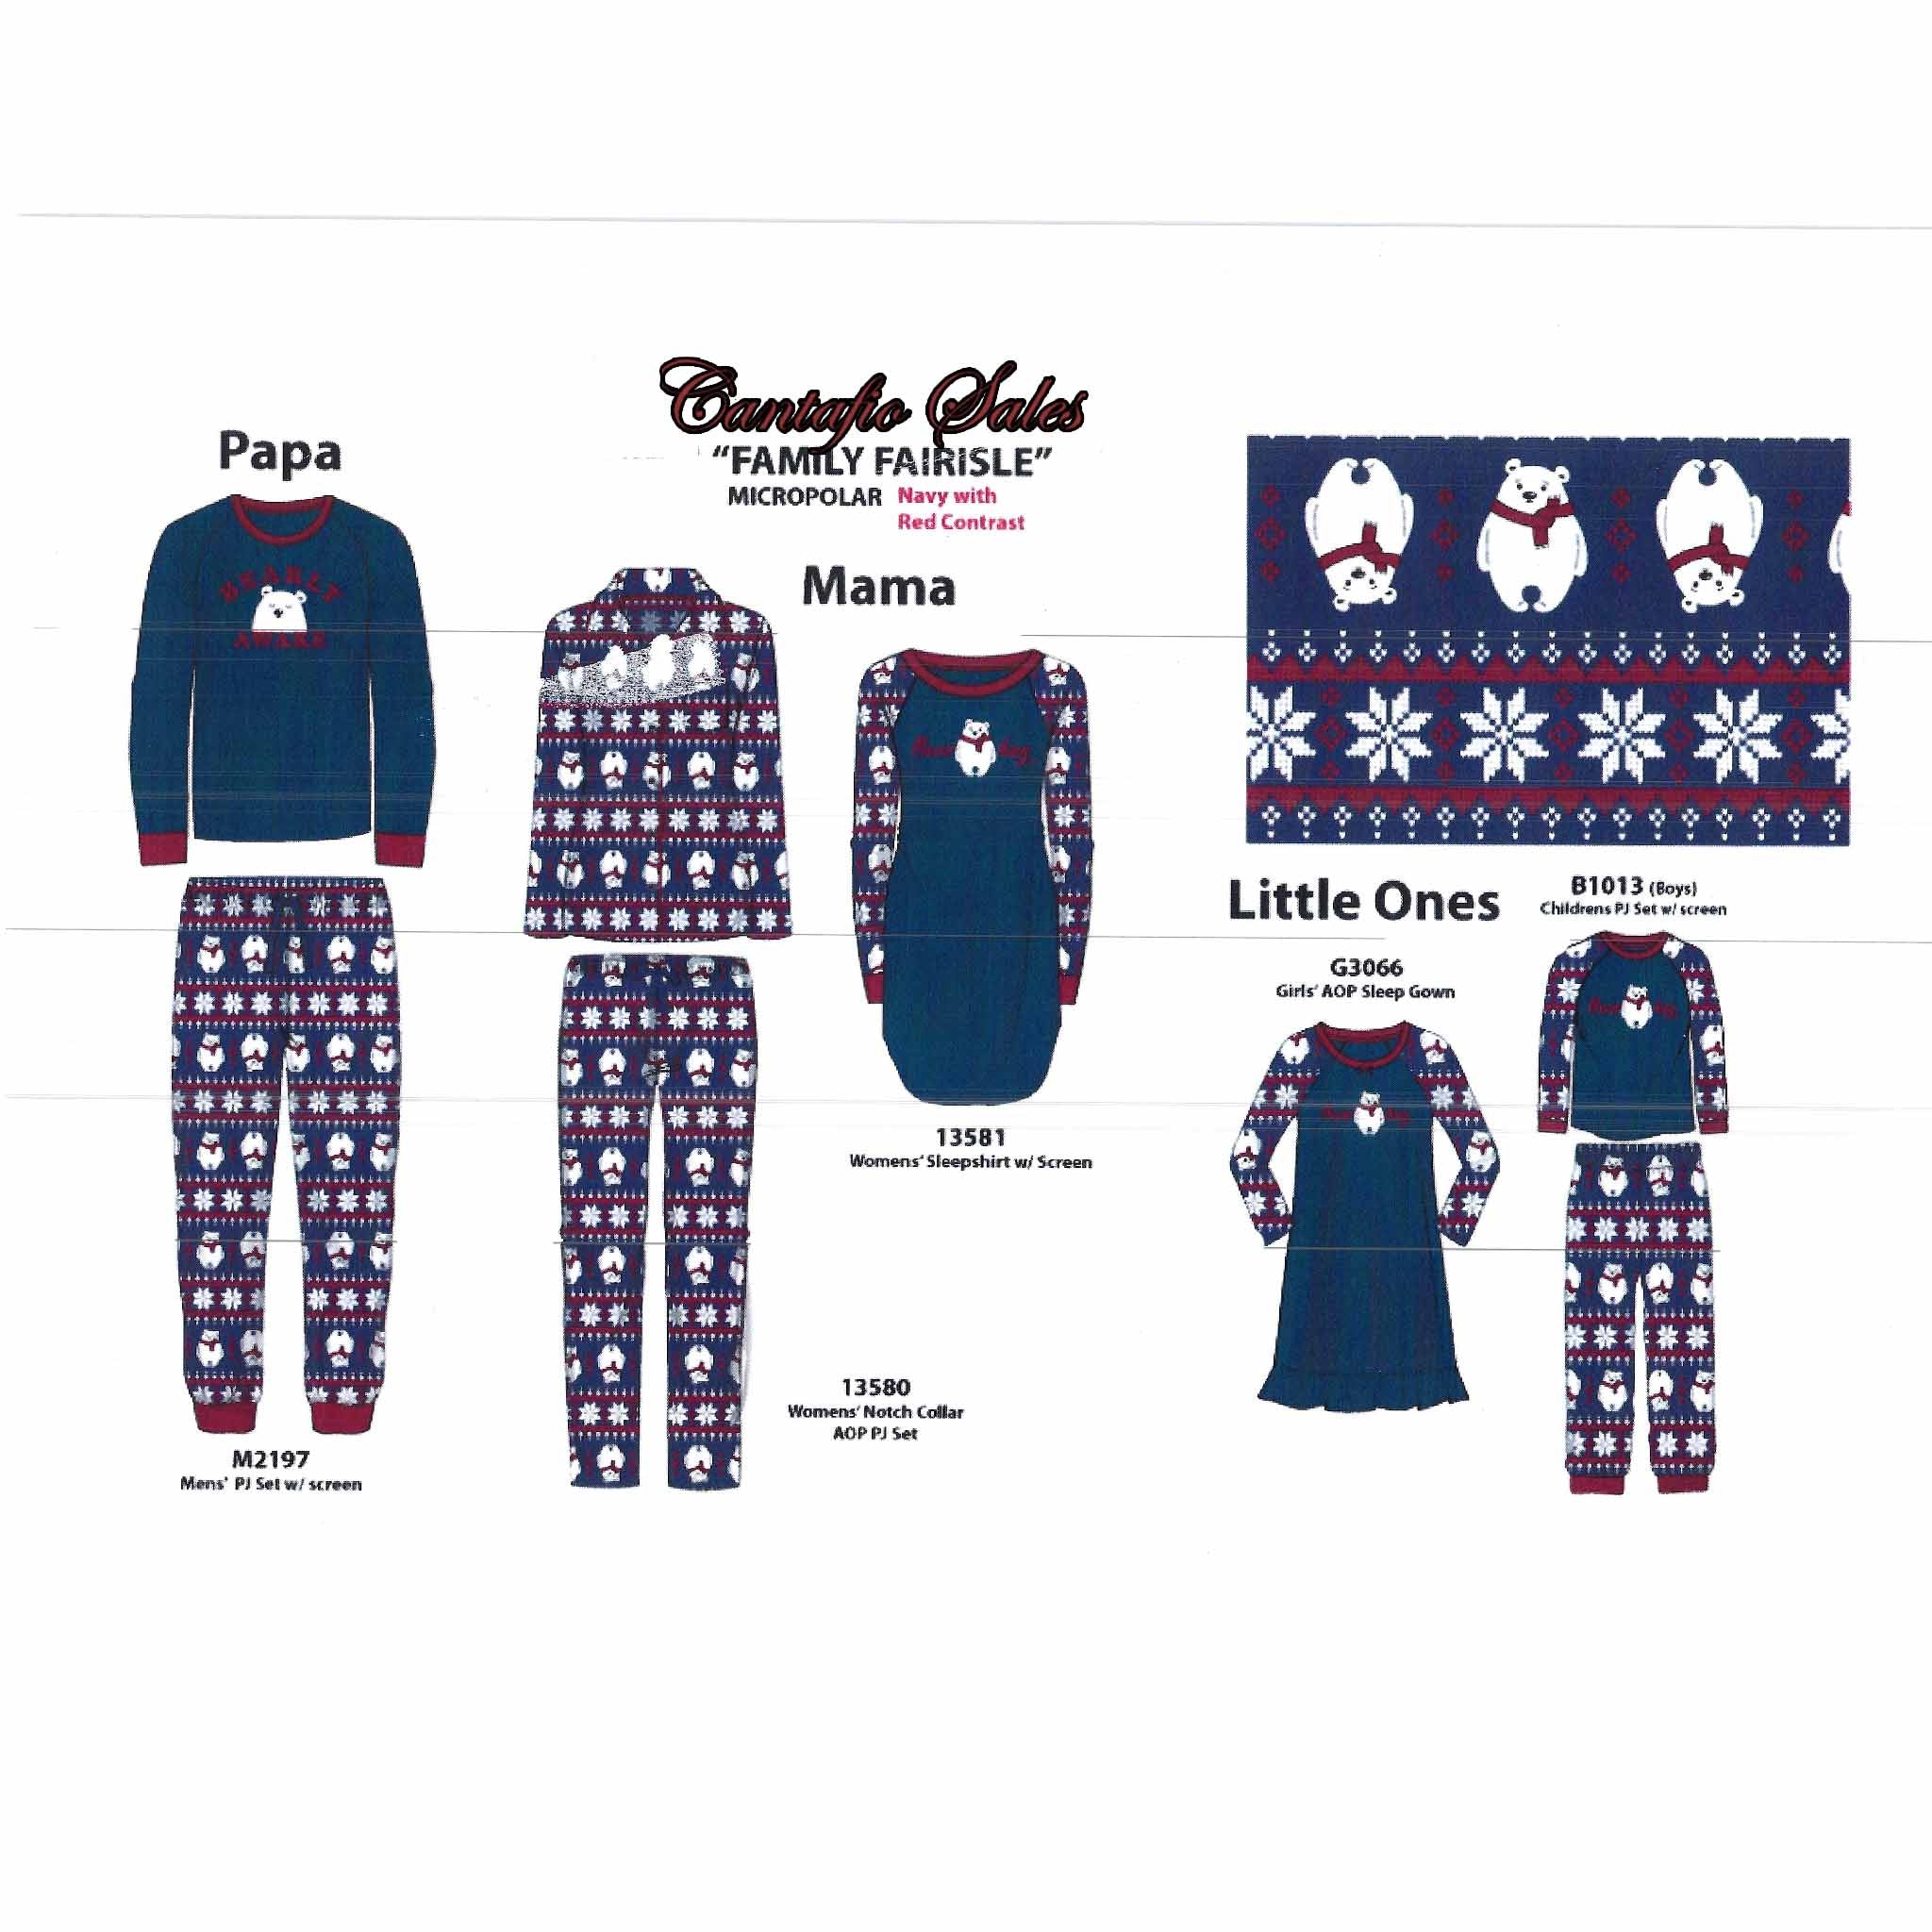 Men's Micropolar Pajama Set with Fairisle Pattern and Screen Printed Top